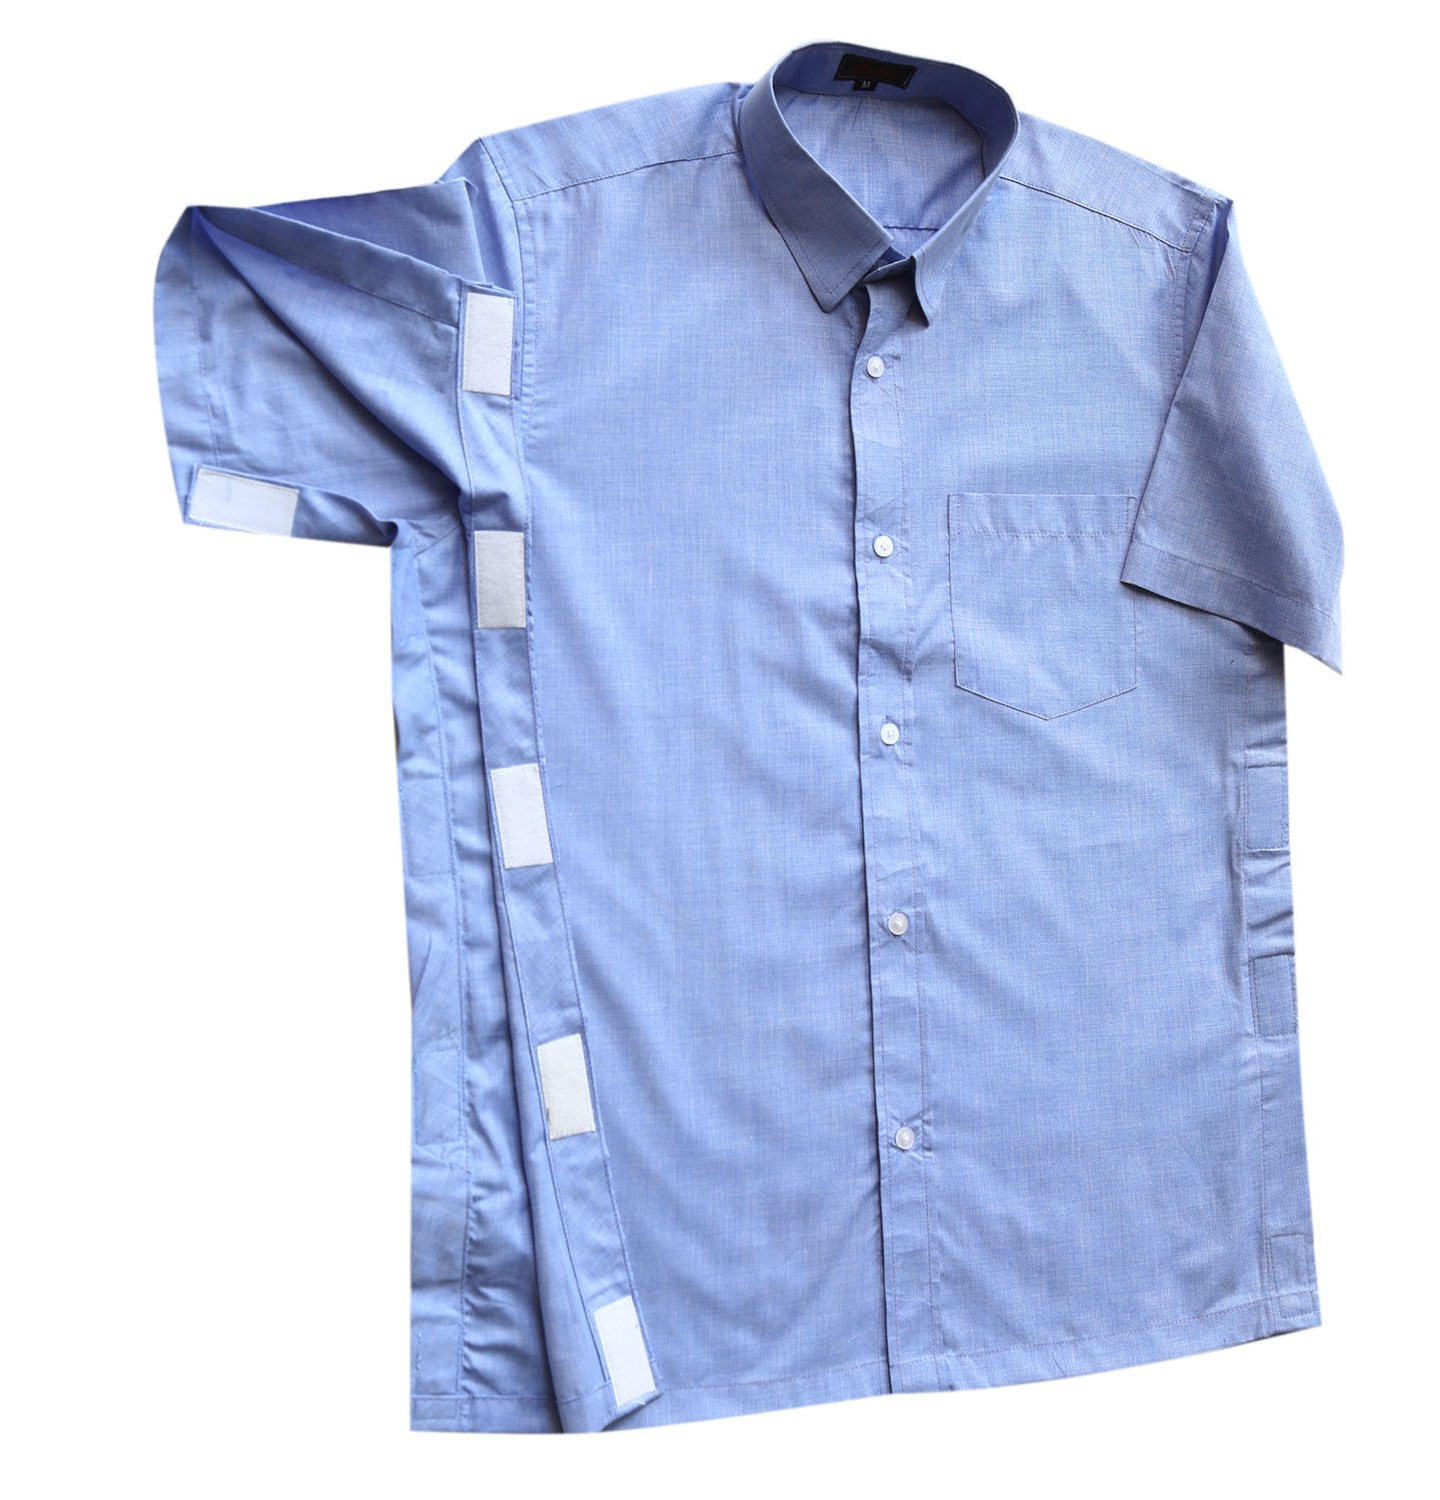 Ekkaika Side Open Shirt (Half Sleeve)